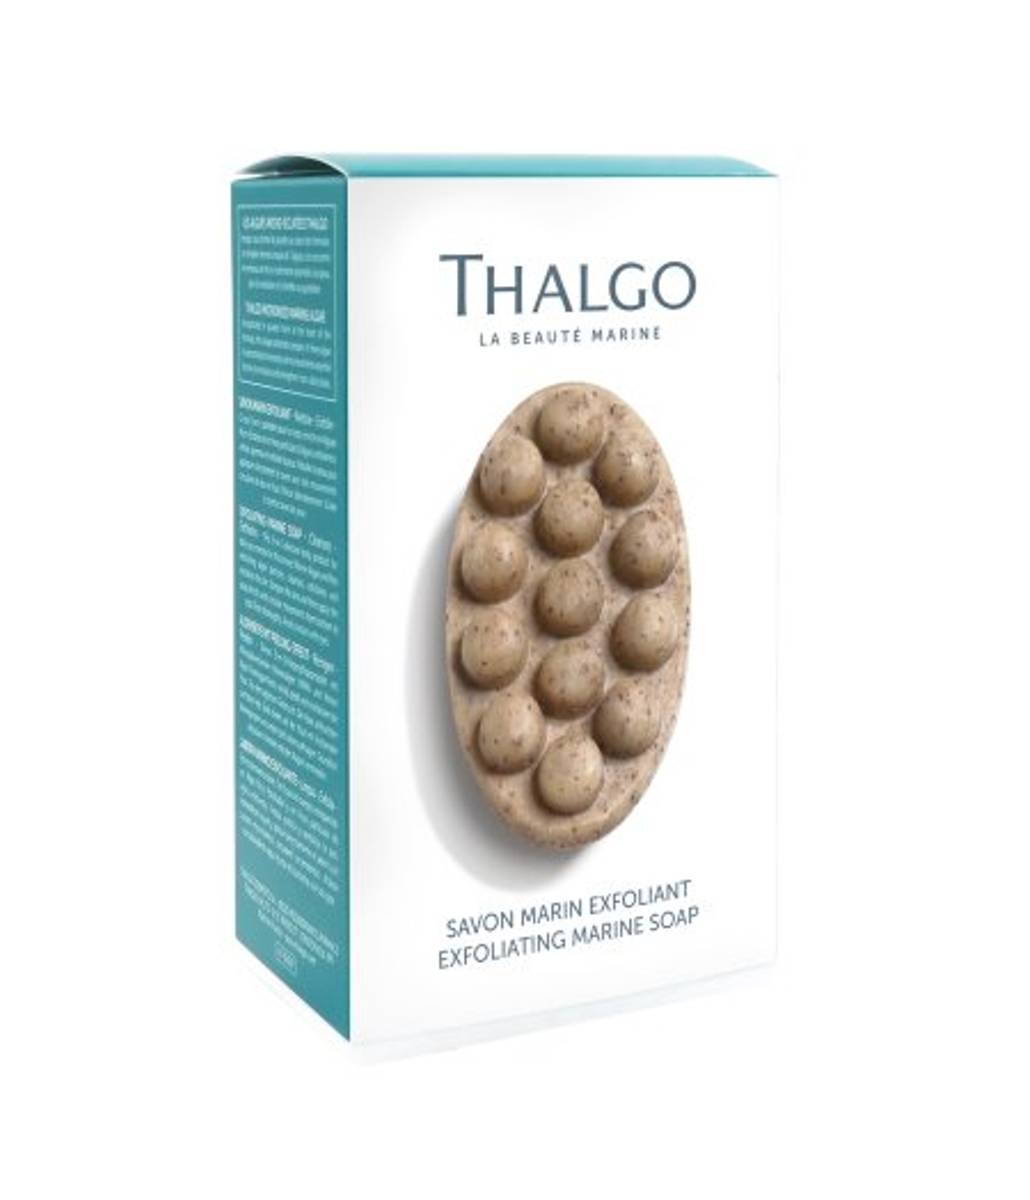 Thalgo Exfoliating Marine Soap, 150 g